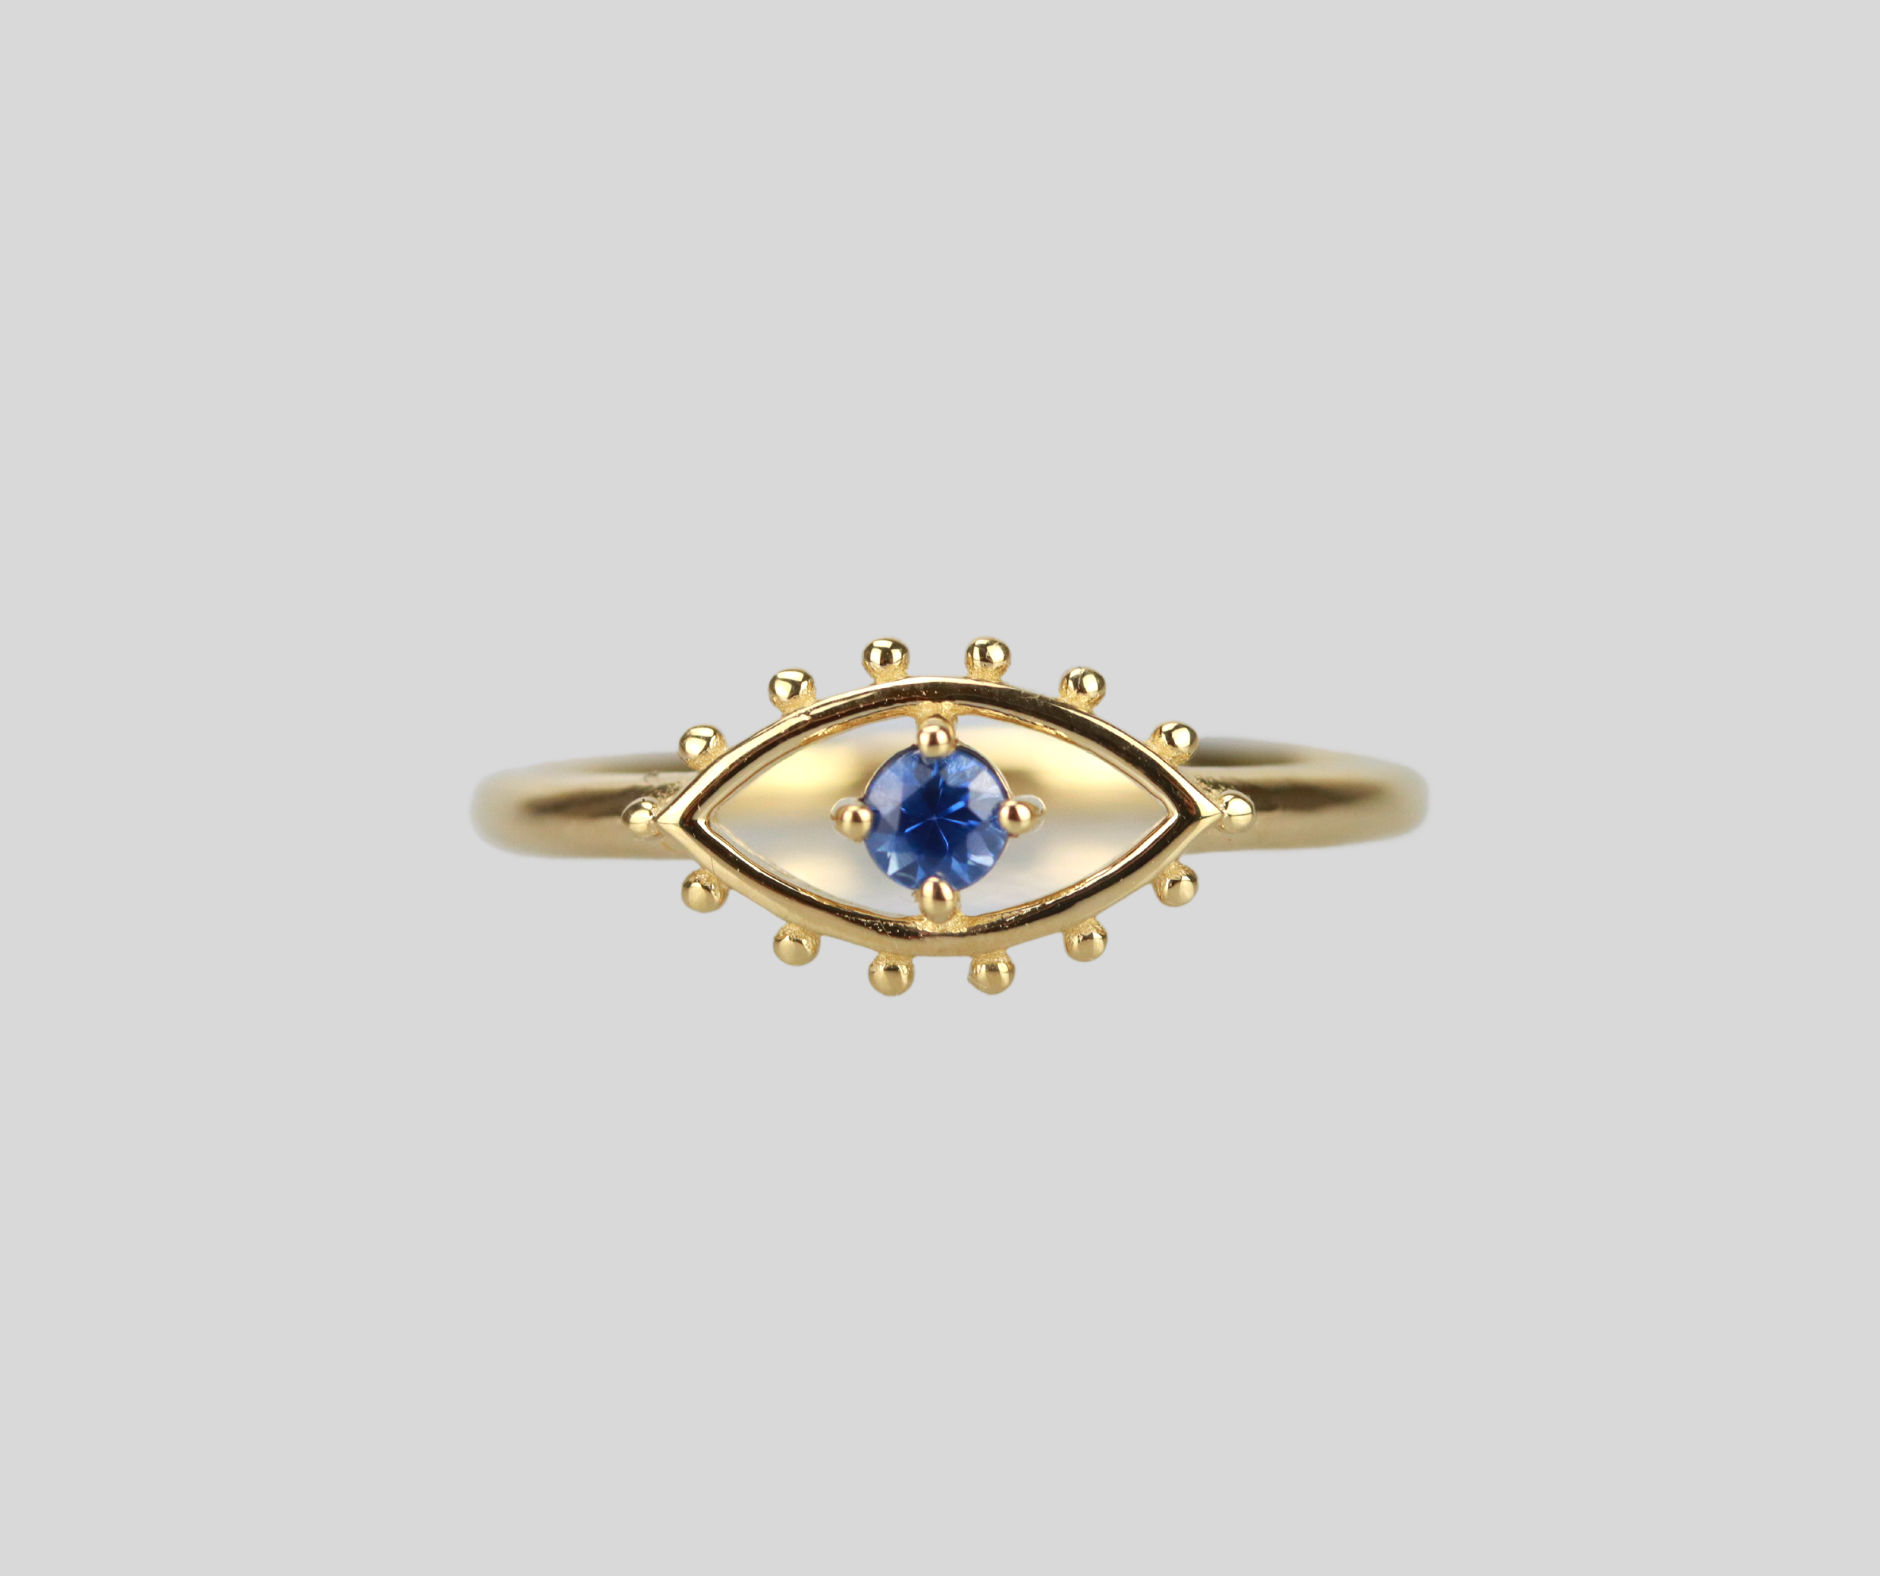 Solid 14k Gold Prosperity Eye Ring in Ble Sapphire